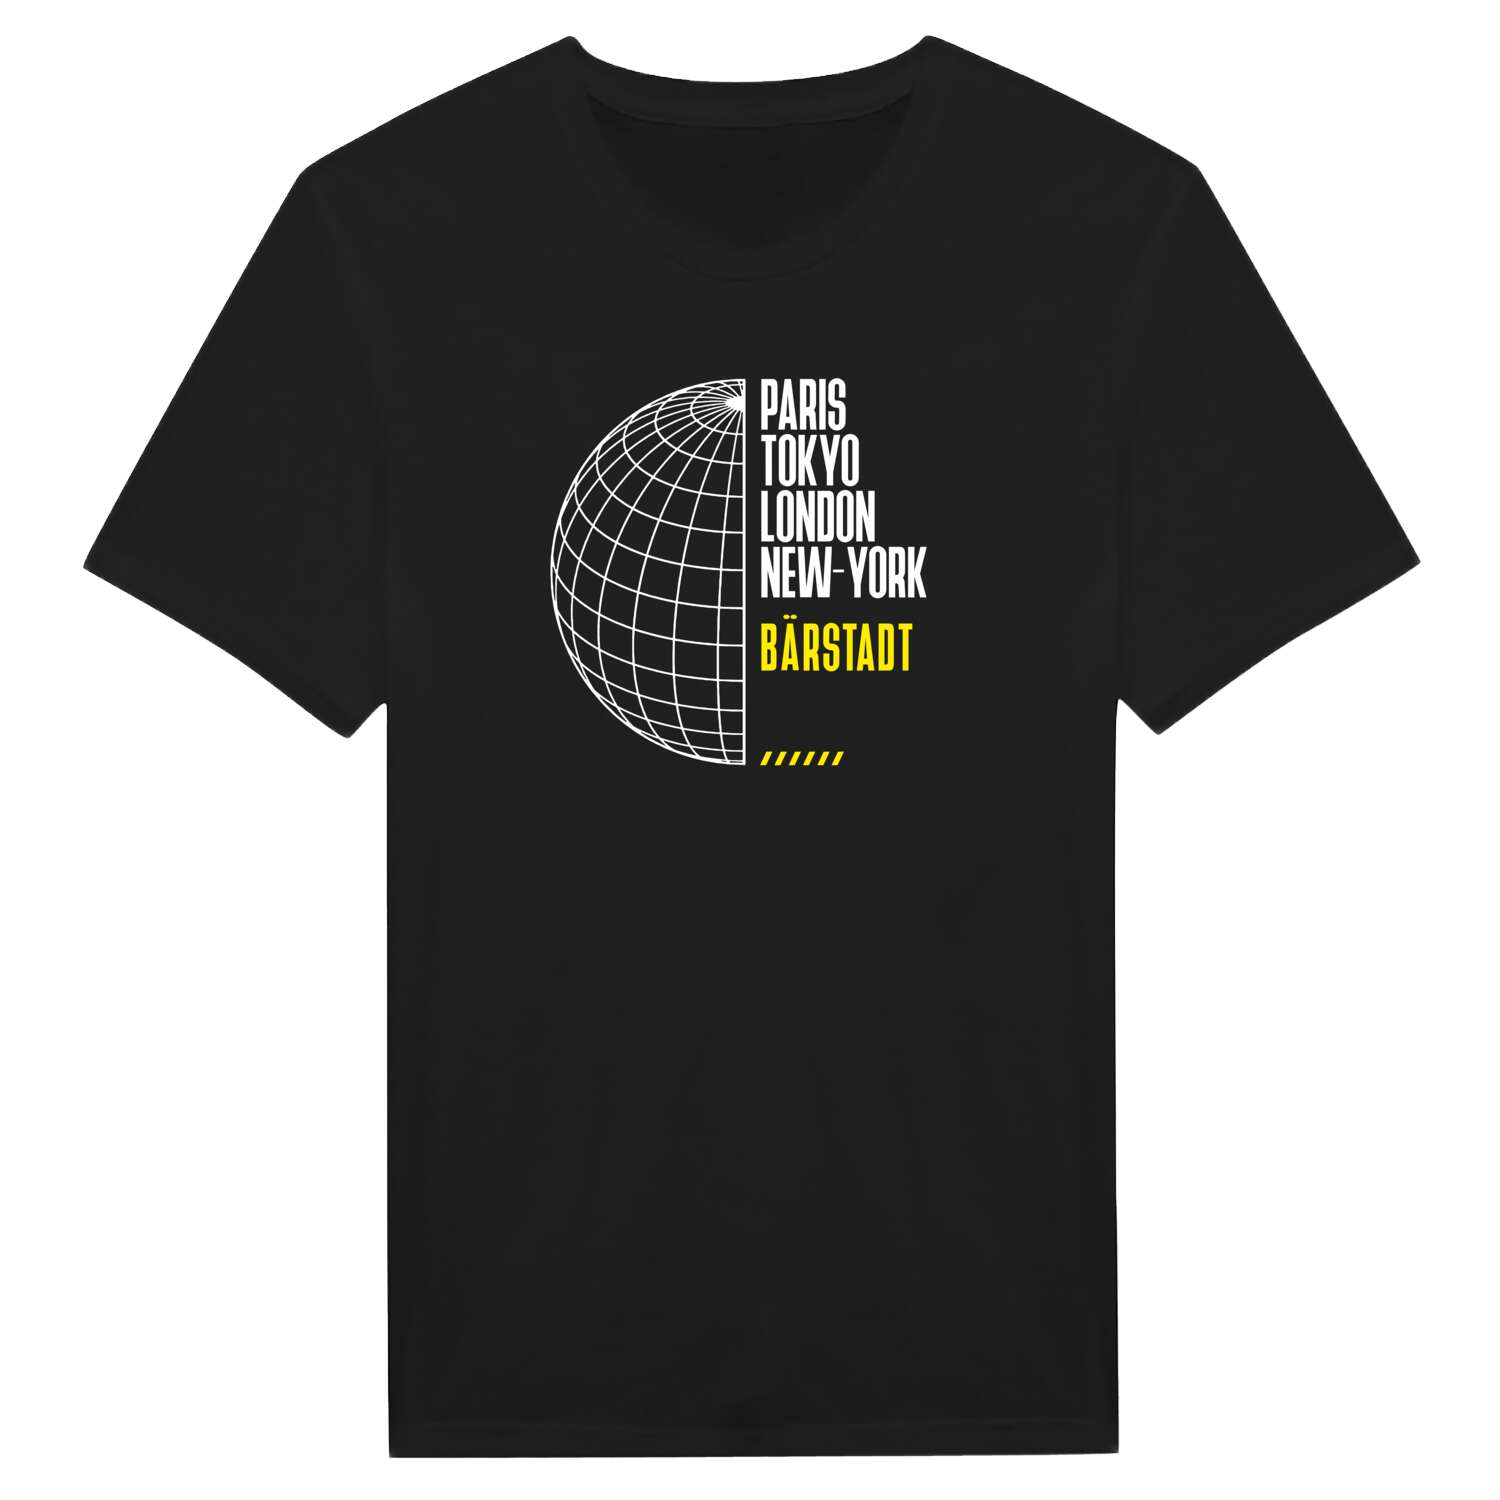 Bärstadt T-Shirt »Paris Tokyo London«